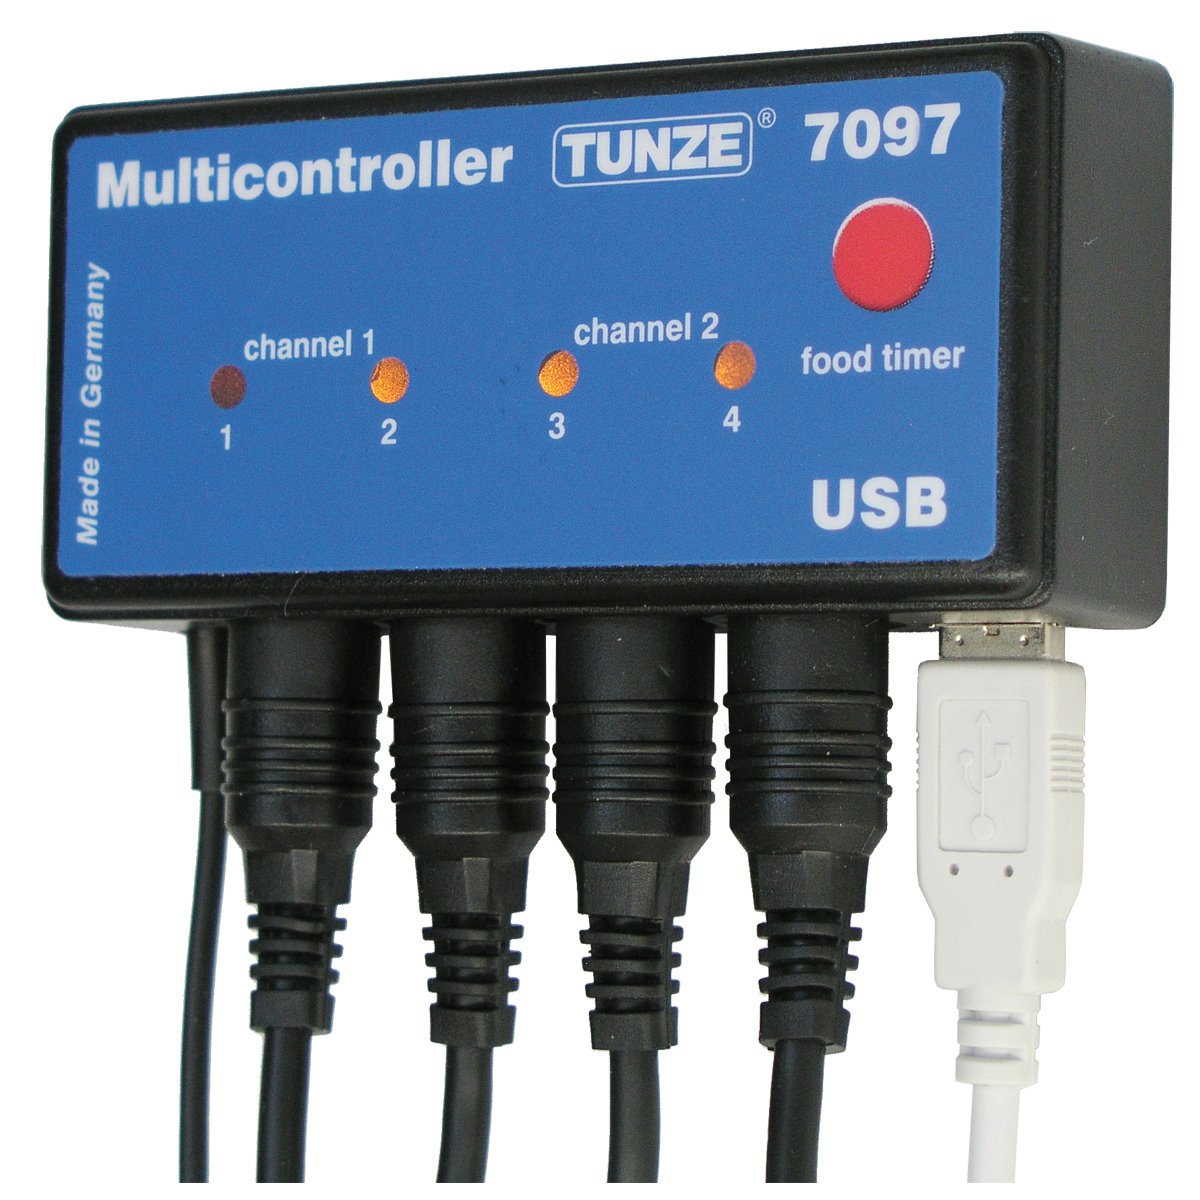 Multicontroller 7097 USB